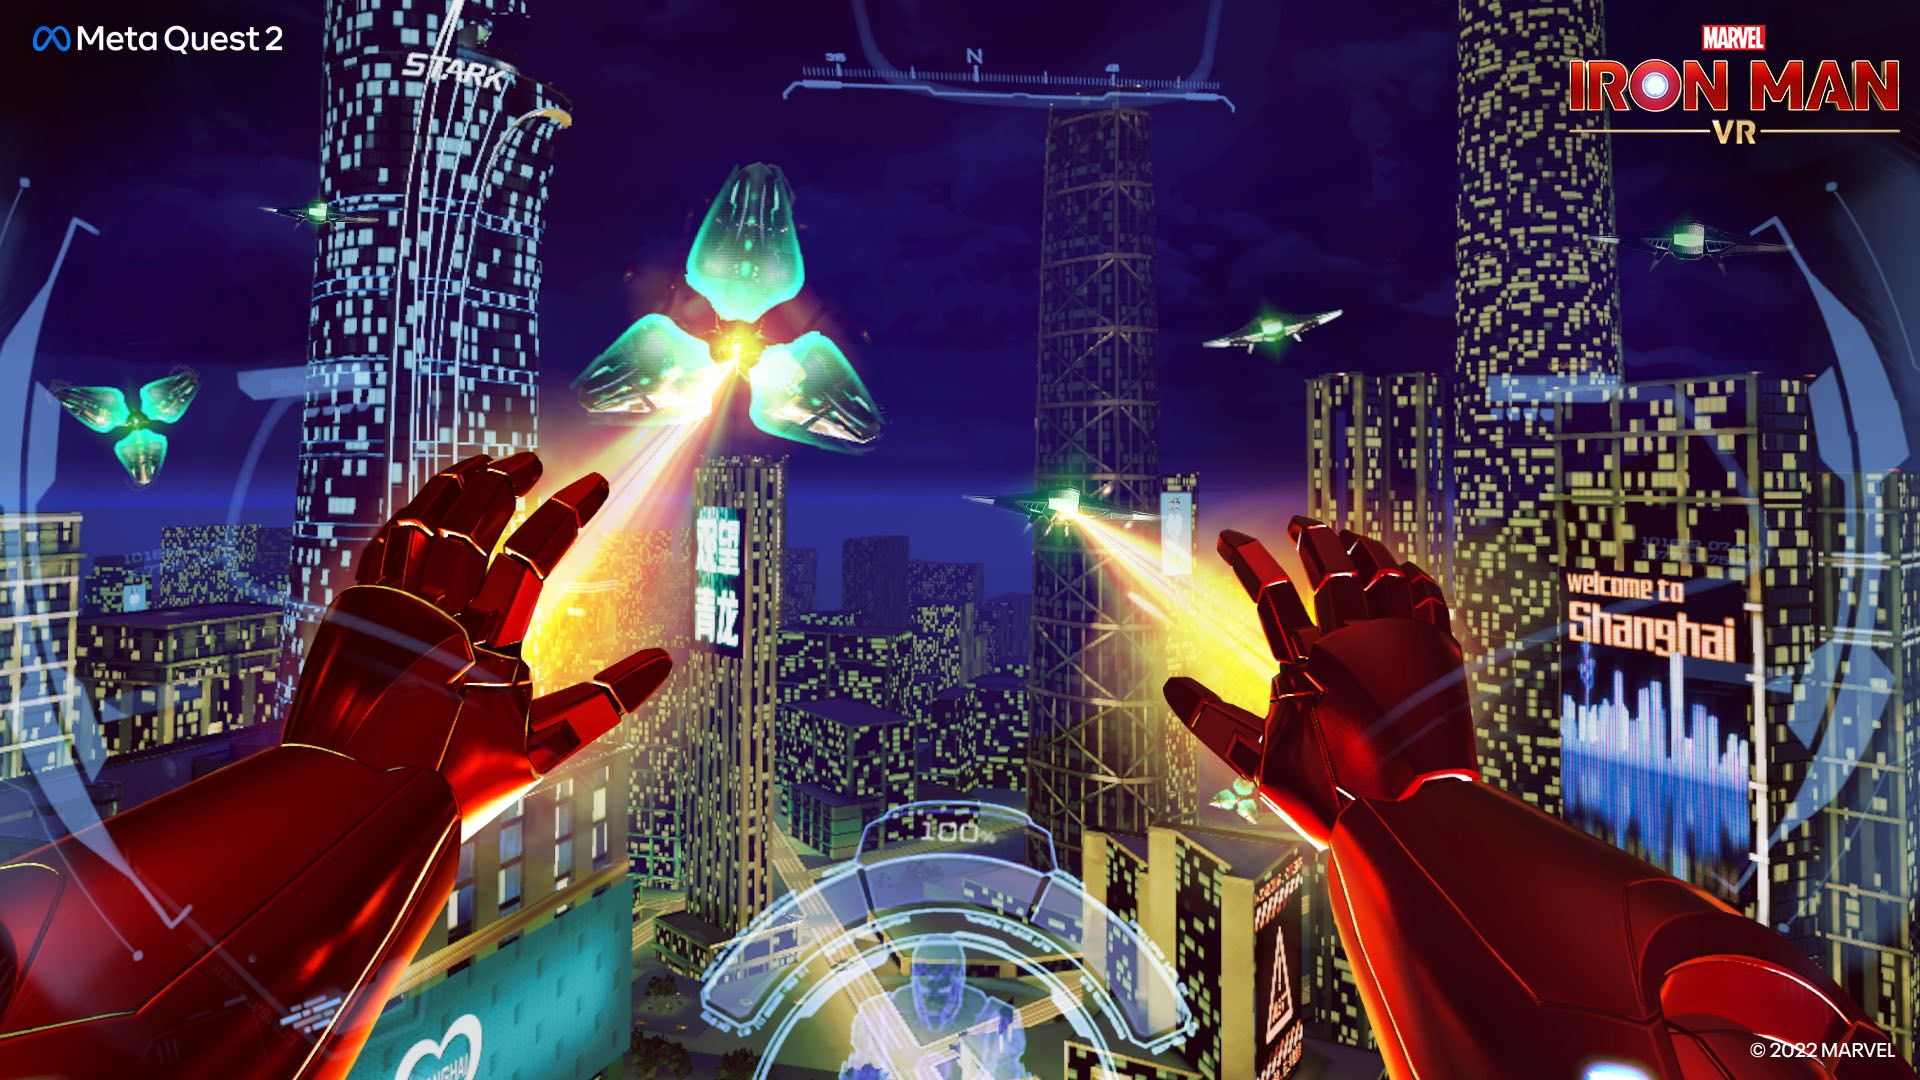 Marvel Iron Man VR Meta Quest 2 screenshot featuring Iron Man battling drones in Shanghai.